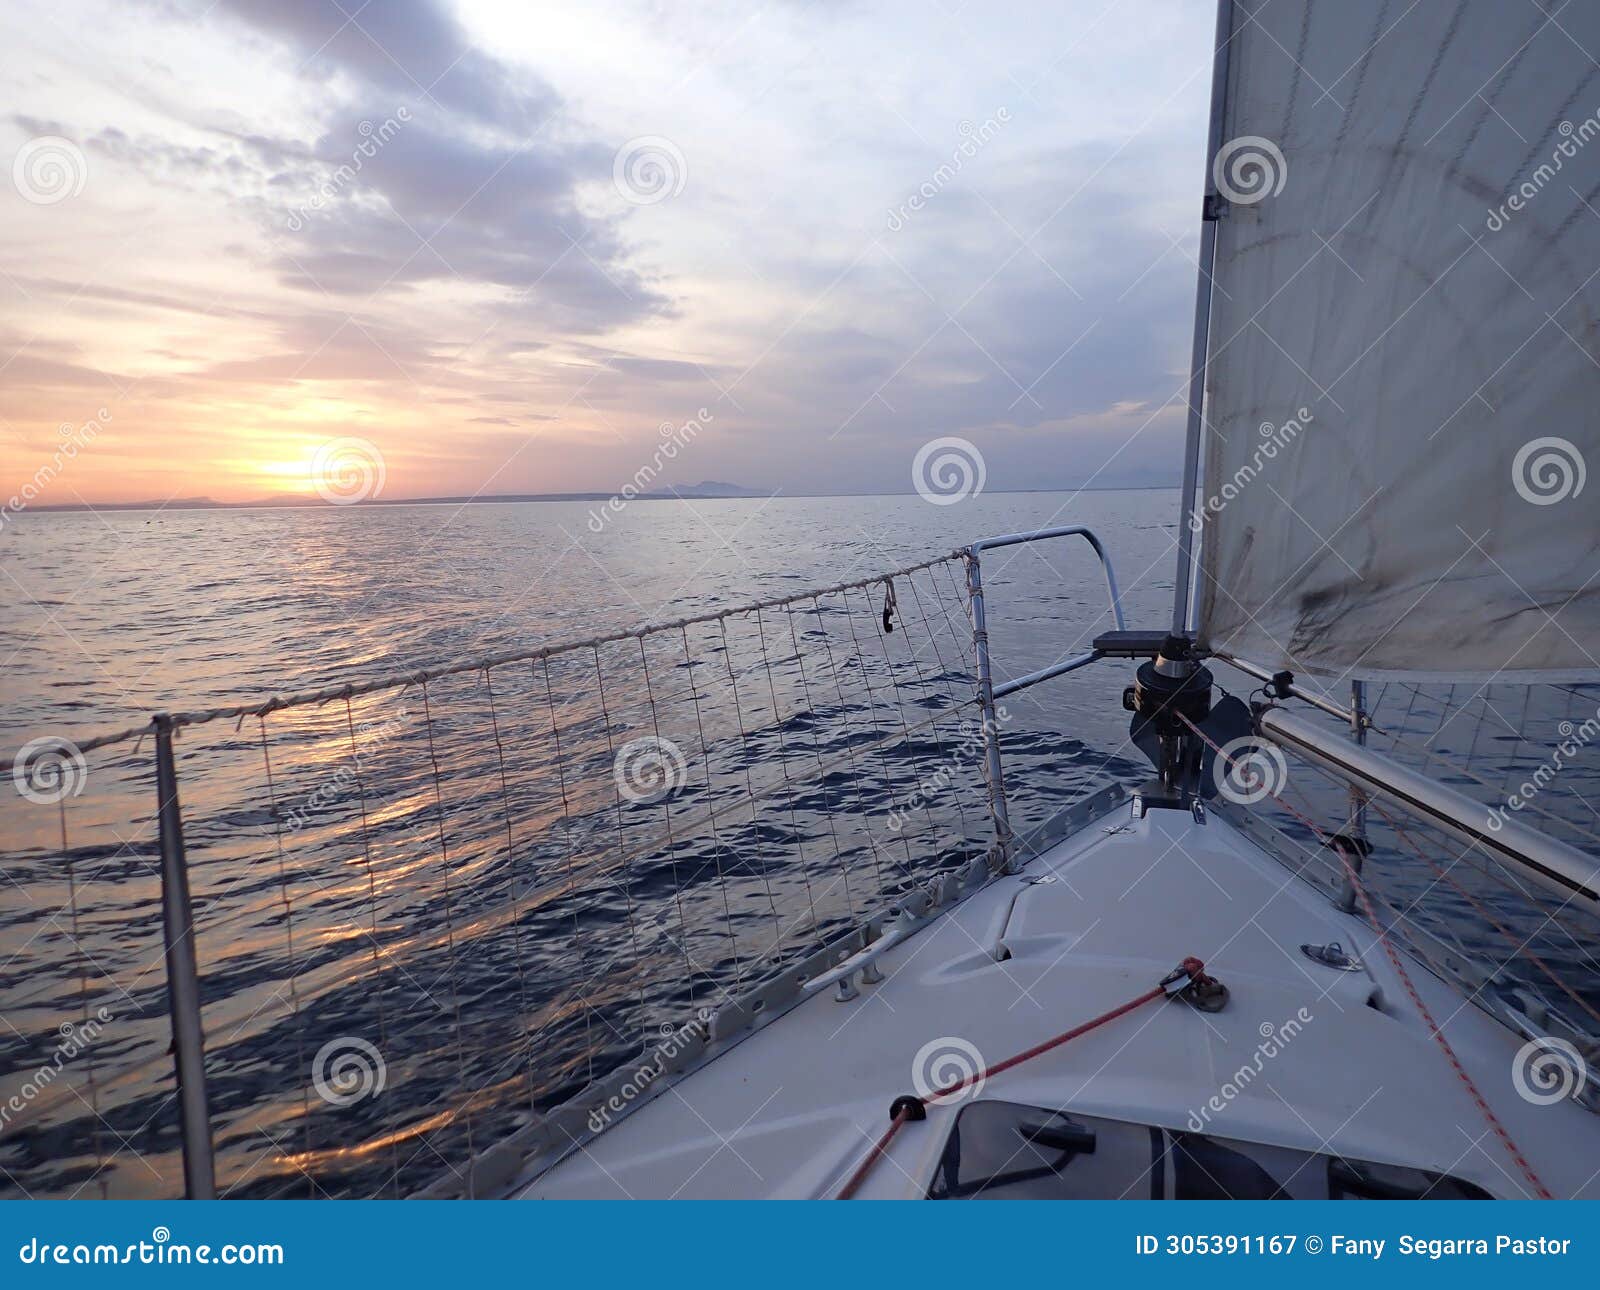 sailing at the mediterranean sunset